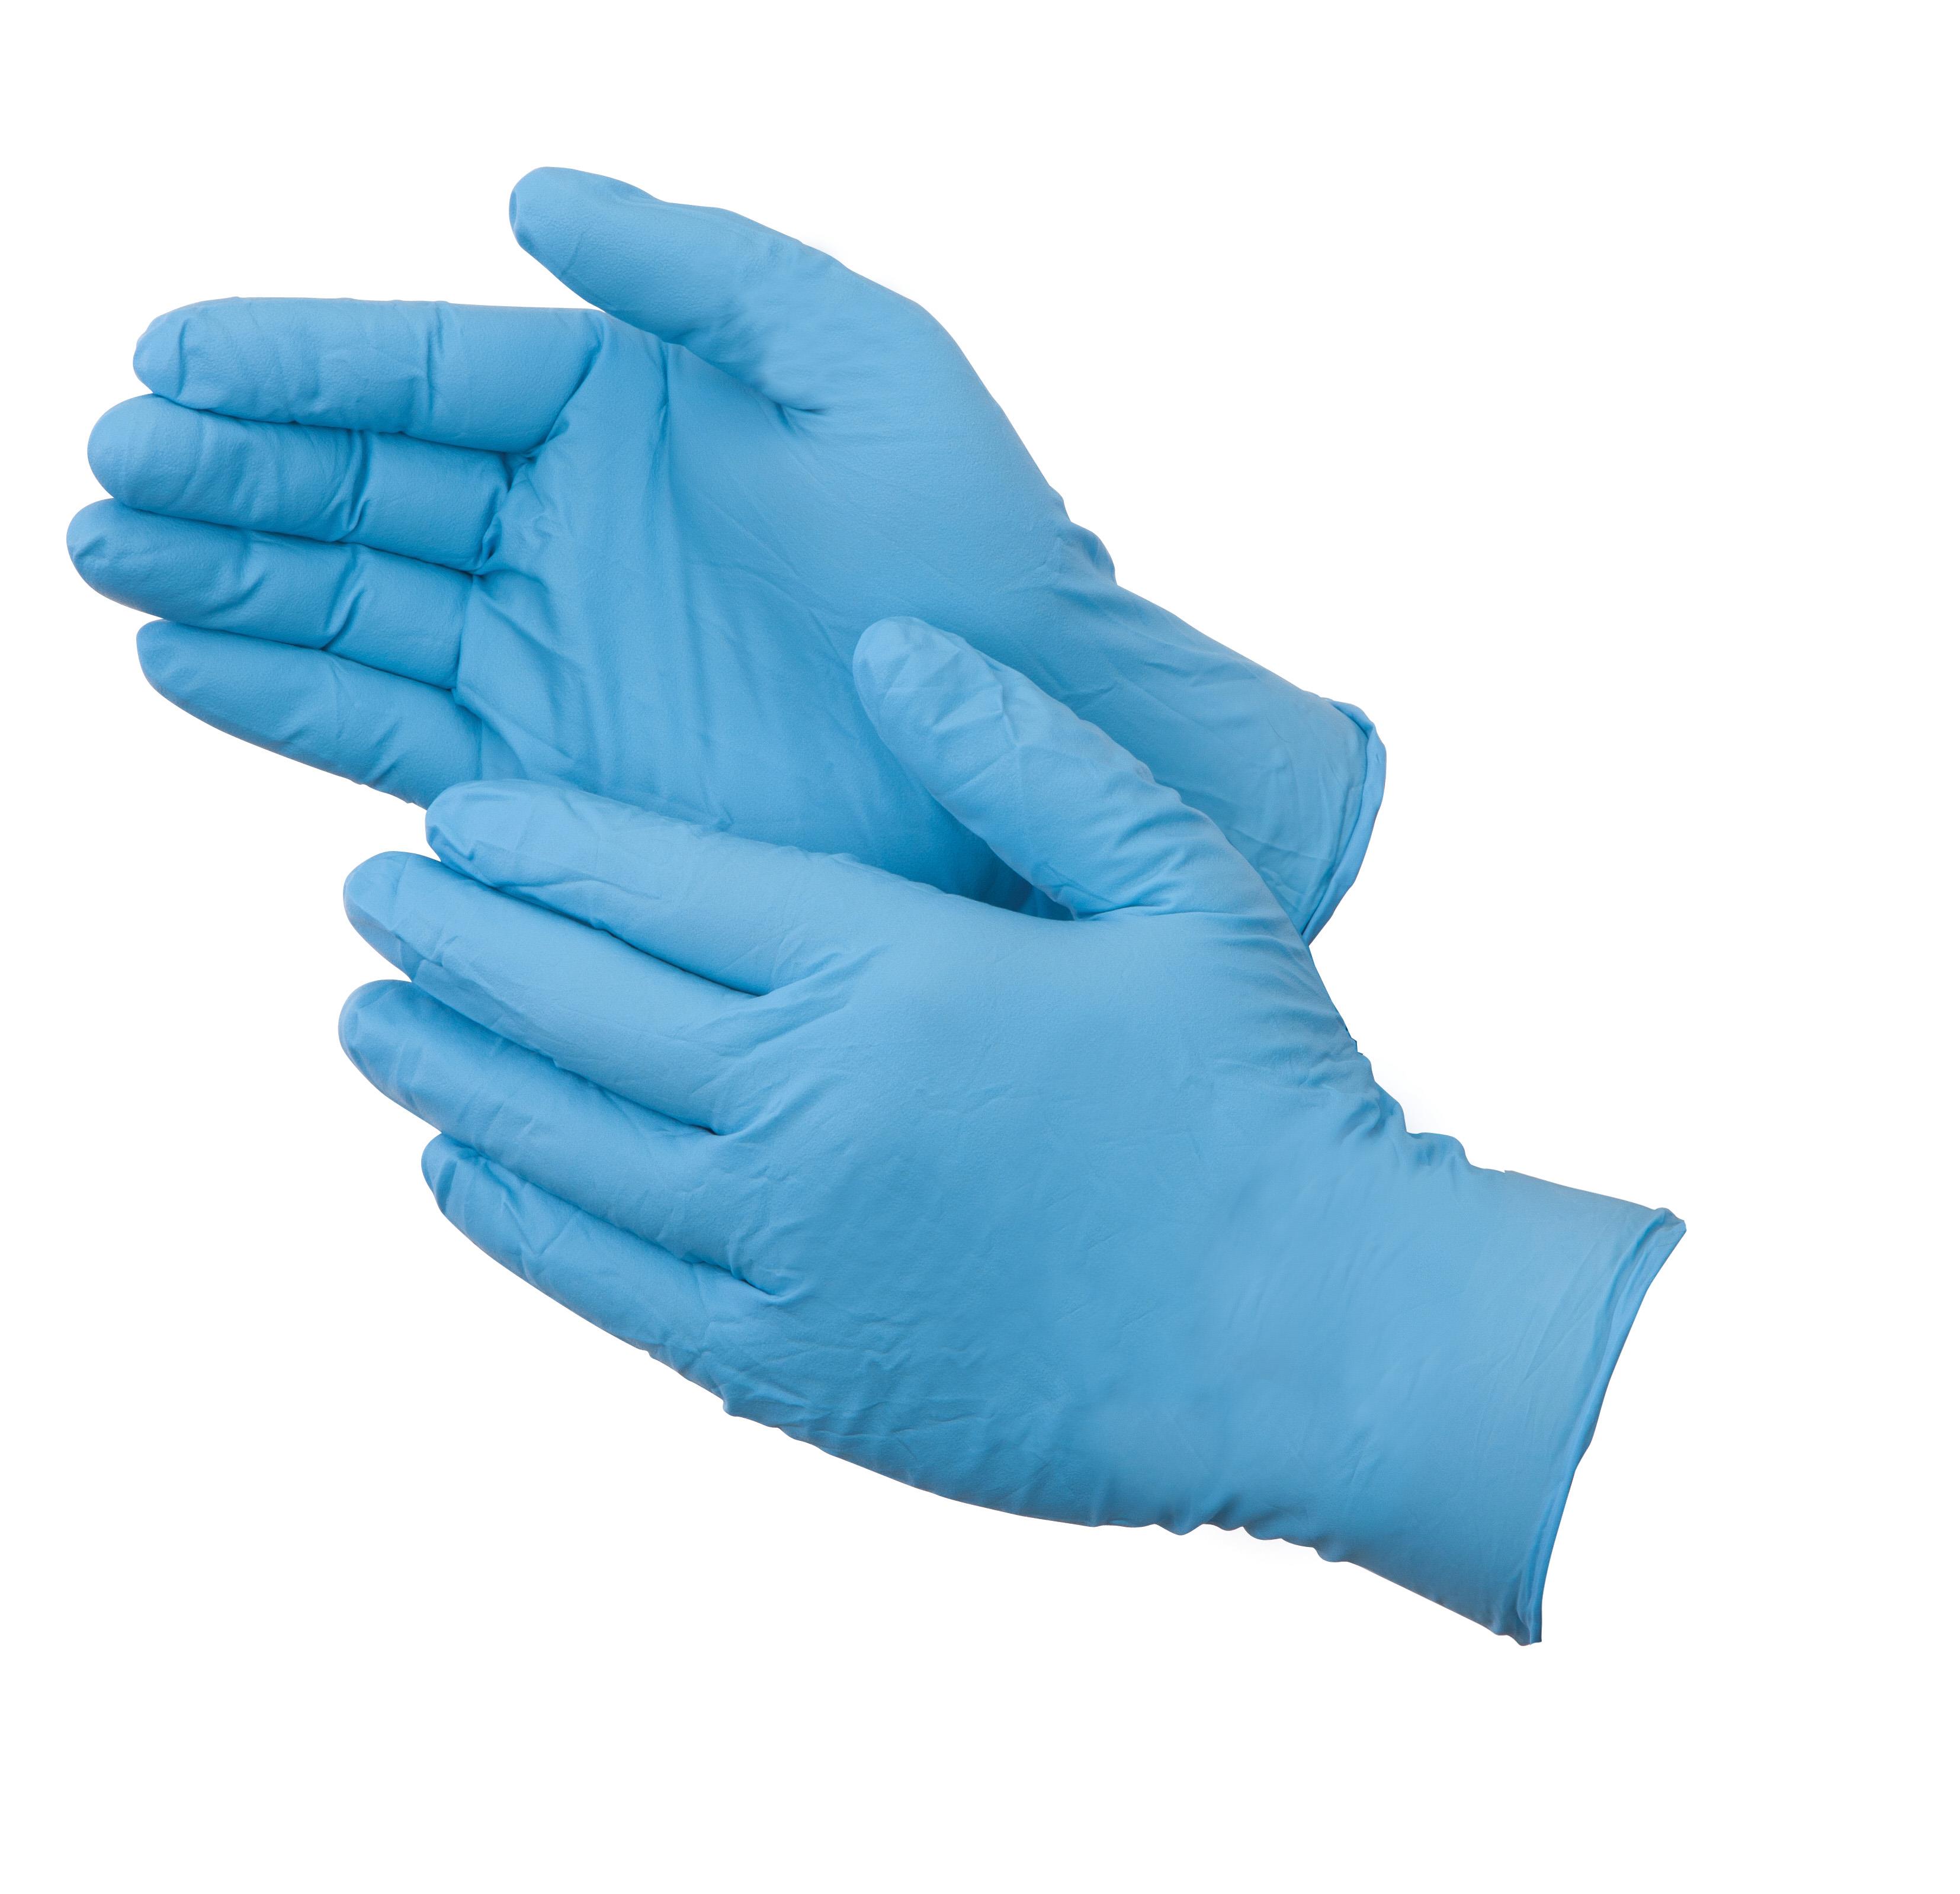 4 MIL POWDERED BLUE NITRILE 100/BX - Disposable Gloves